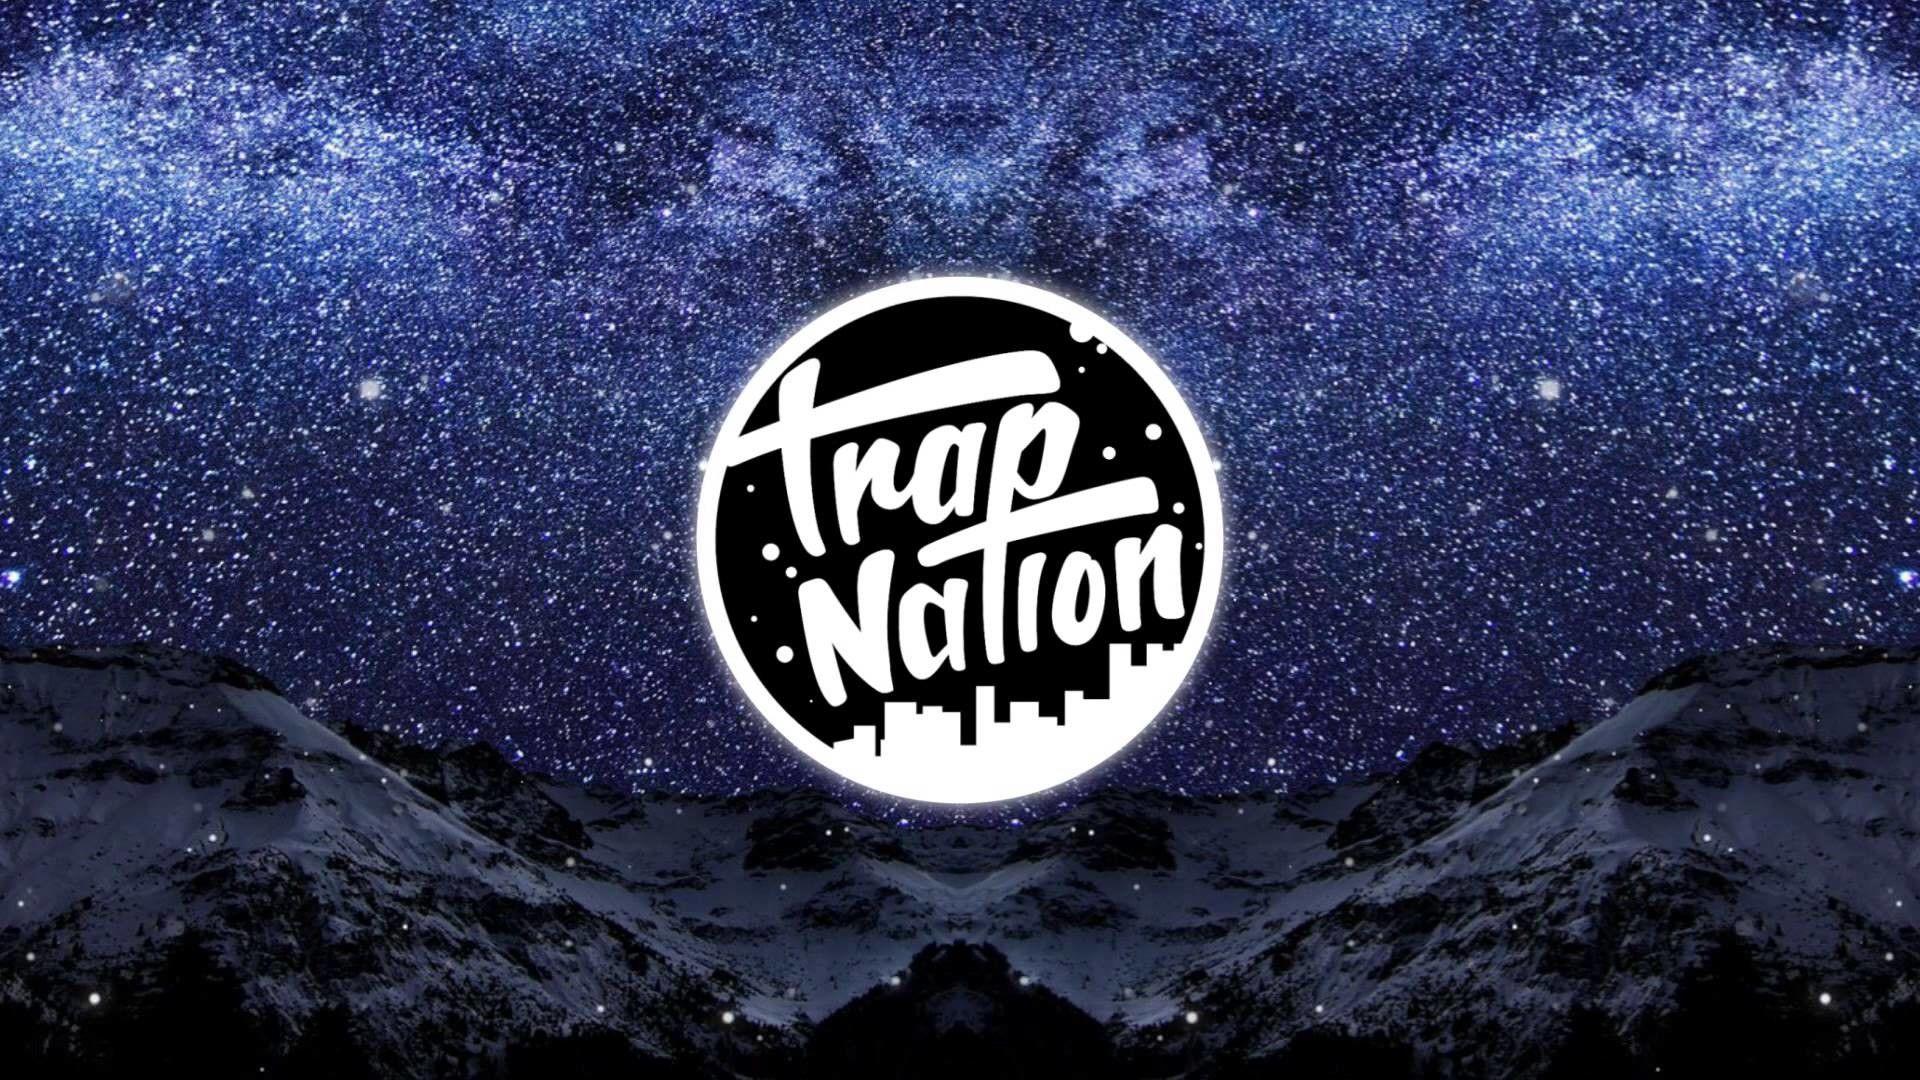 Trap Nation Wallpaper